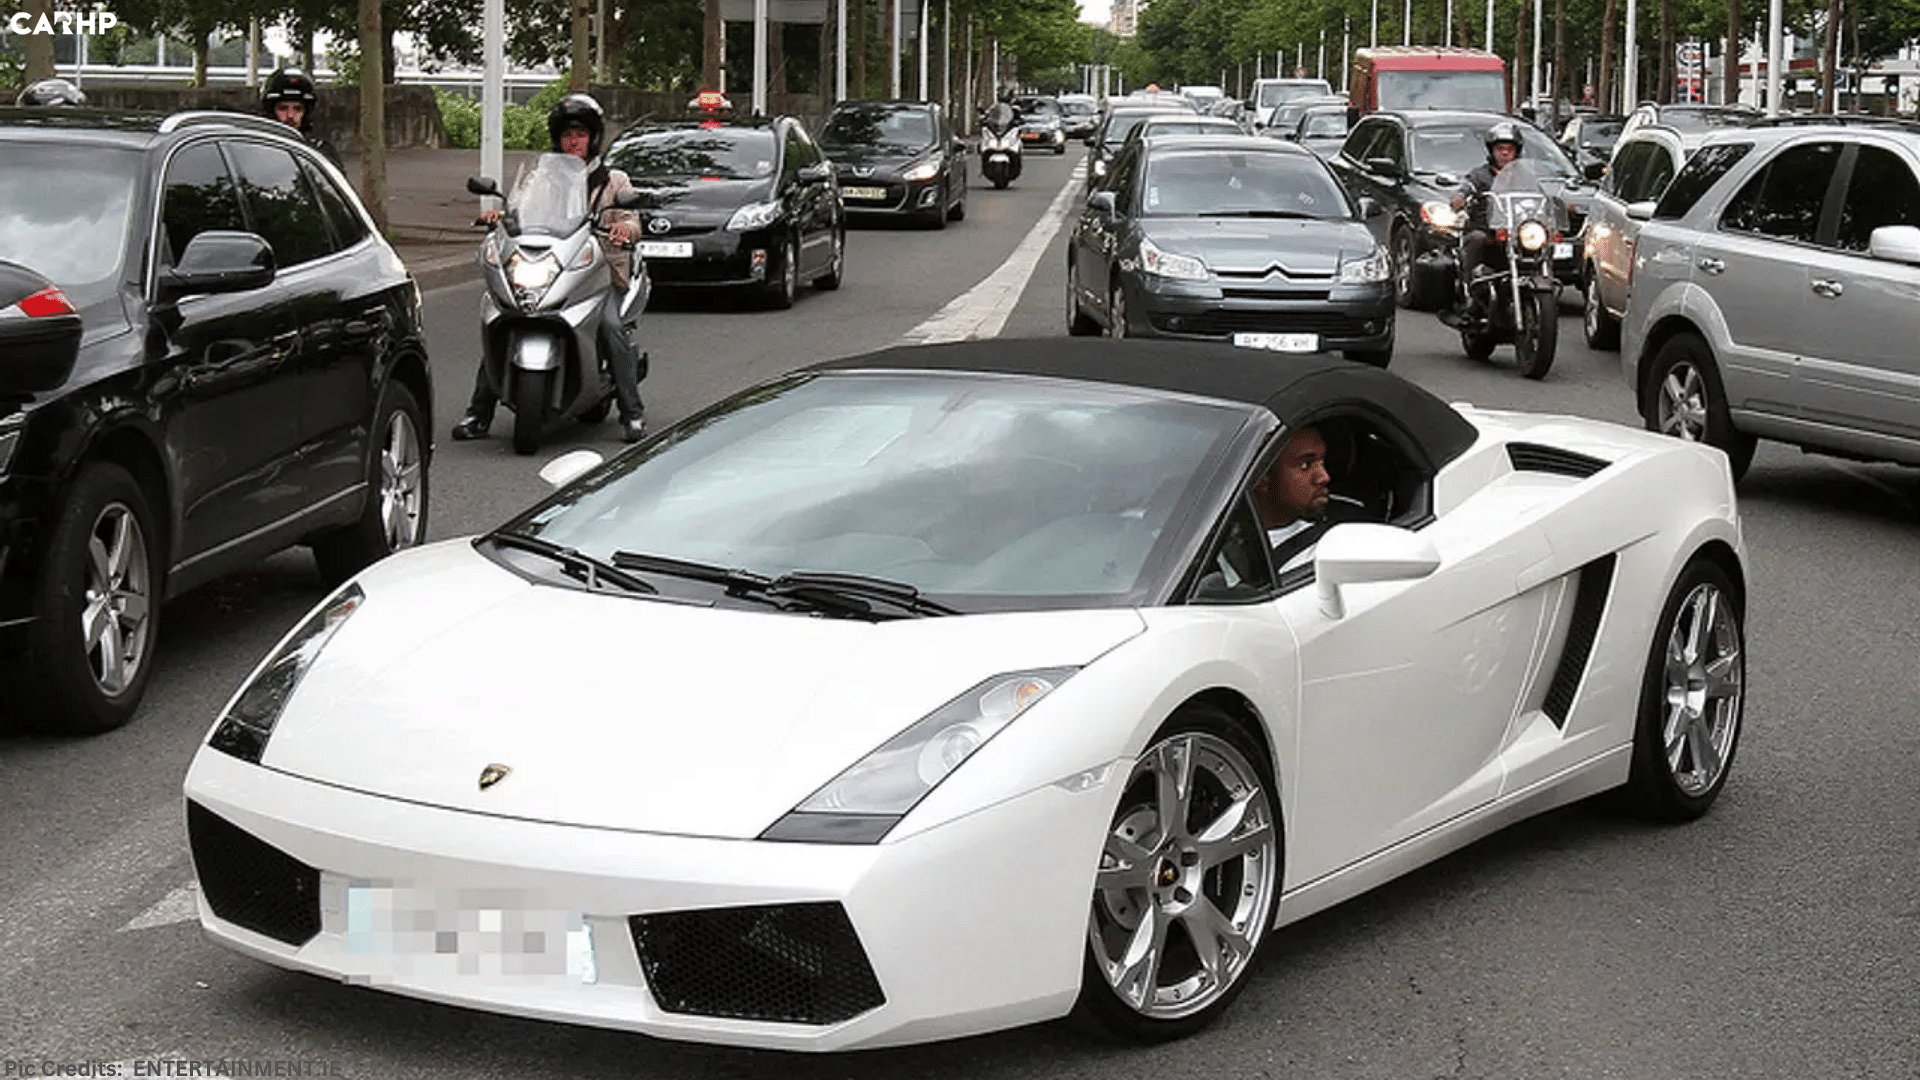 Kanye West's $7 Million Car Collection